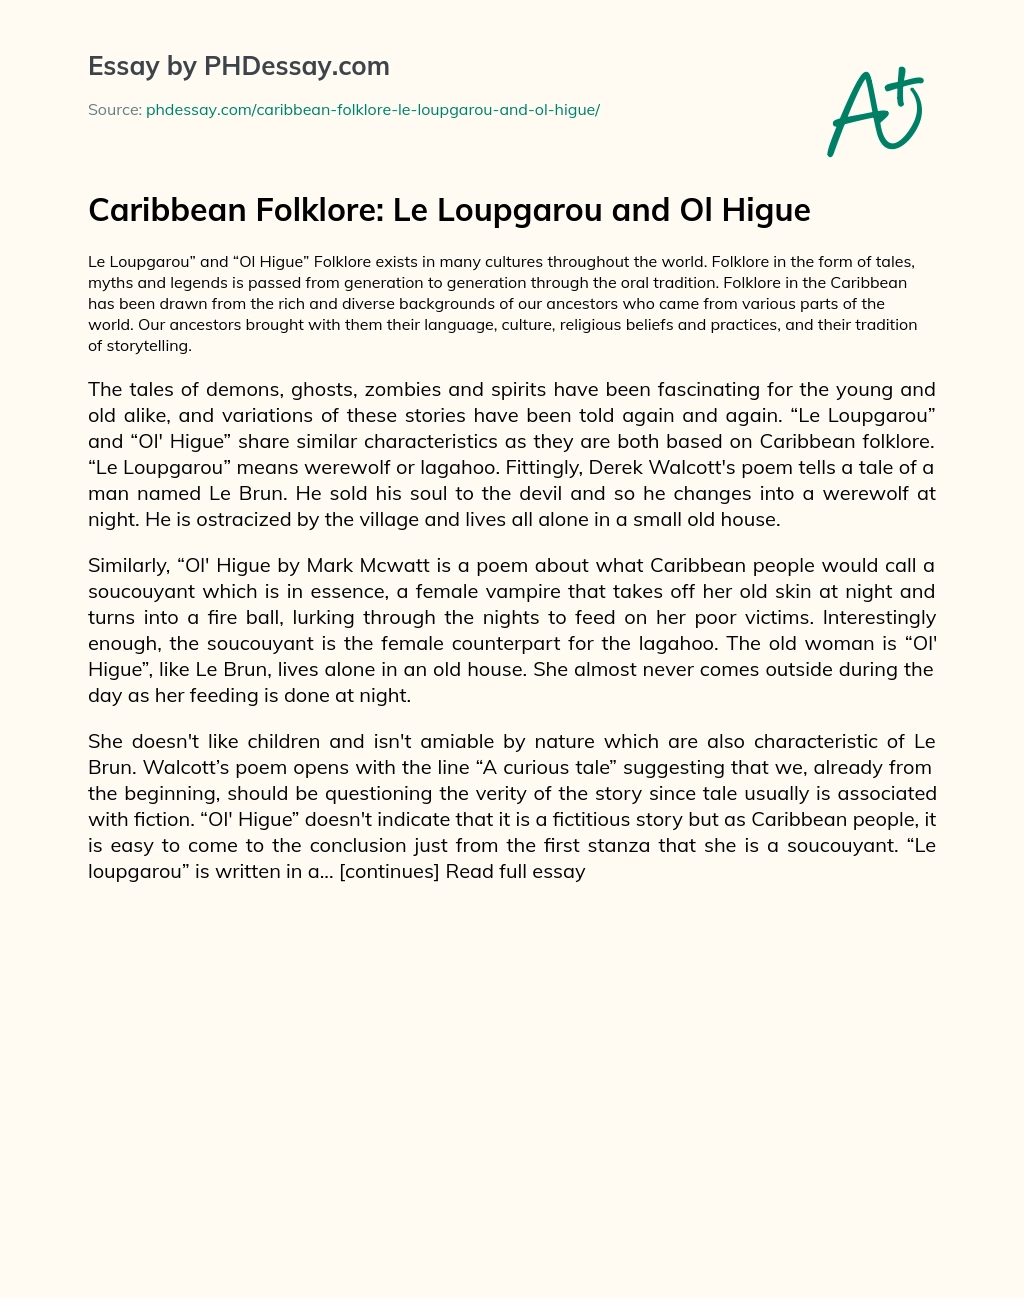 Caribbean Folklore: Le Loupgarou and Ol Higue essay